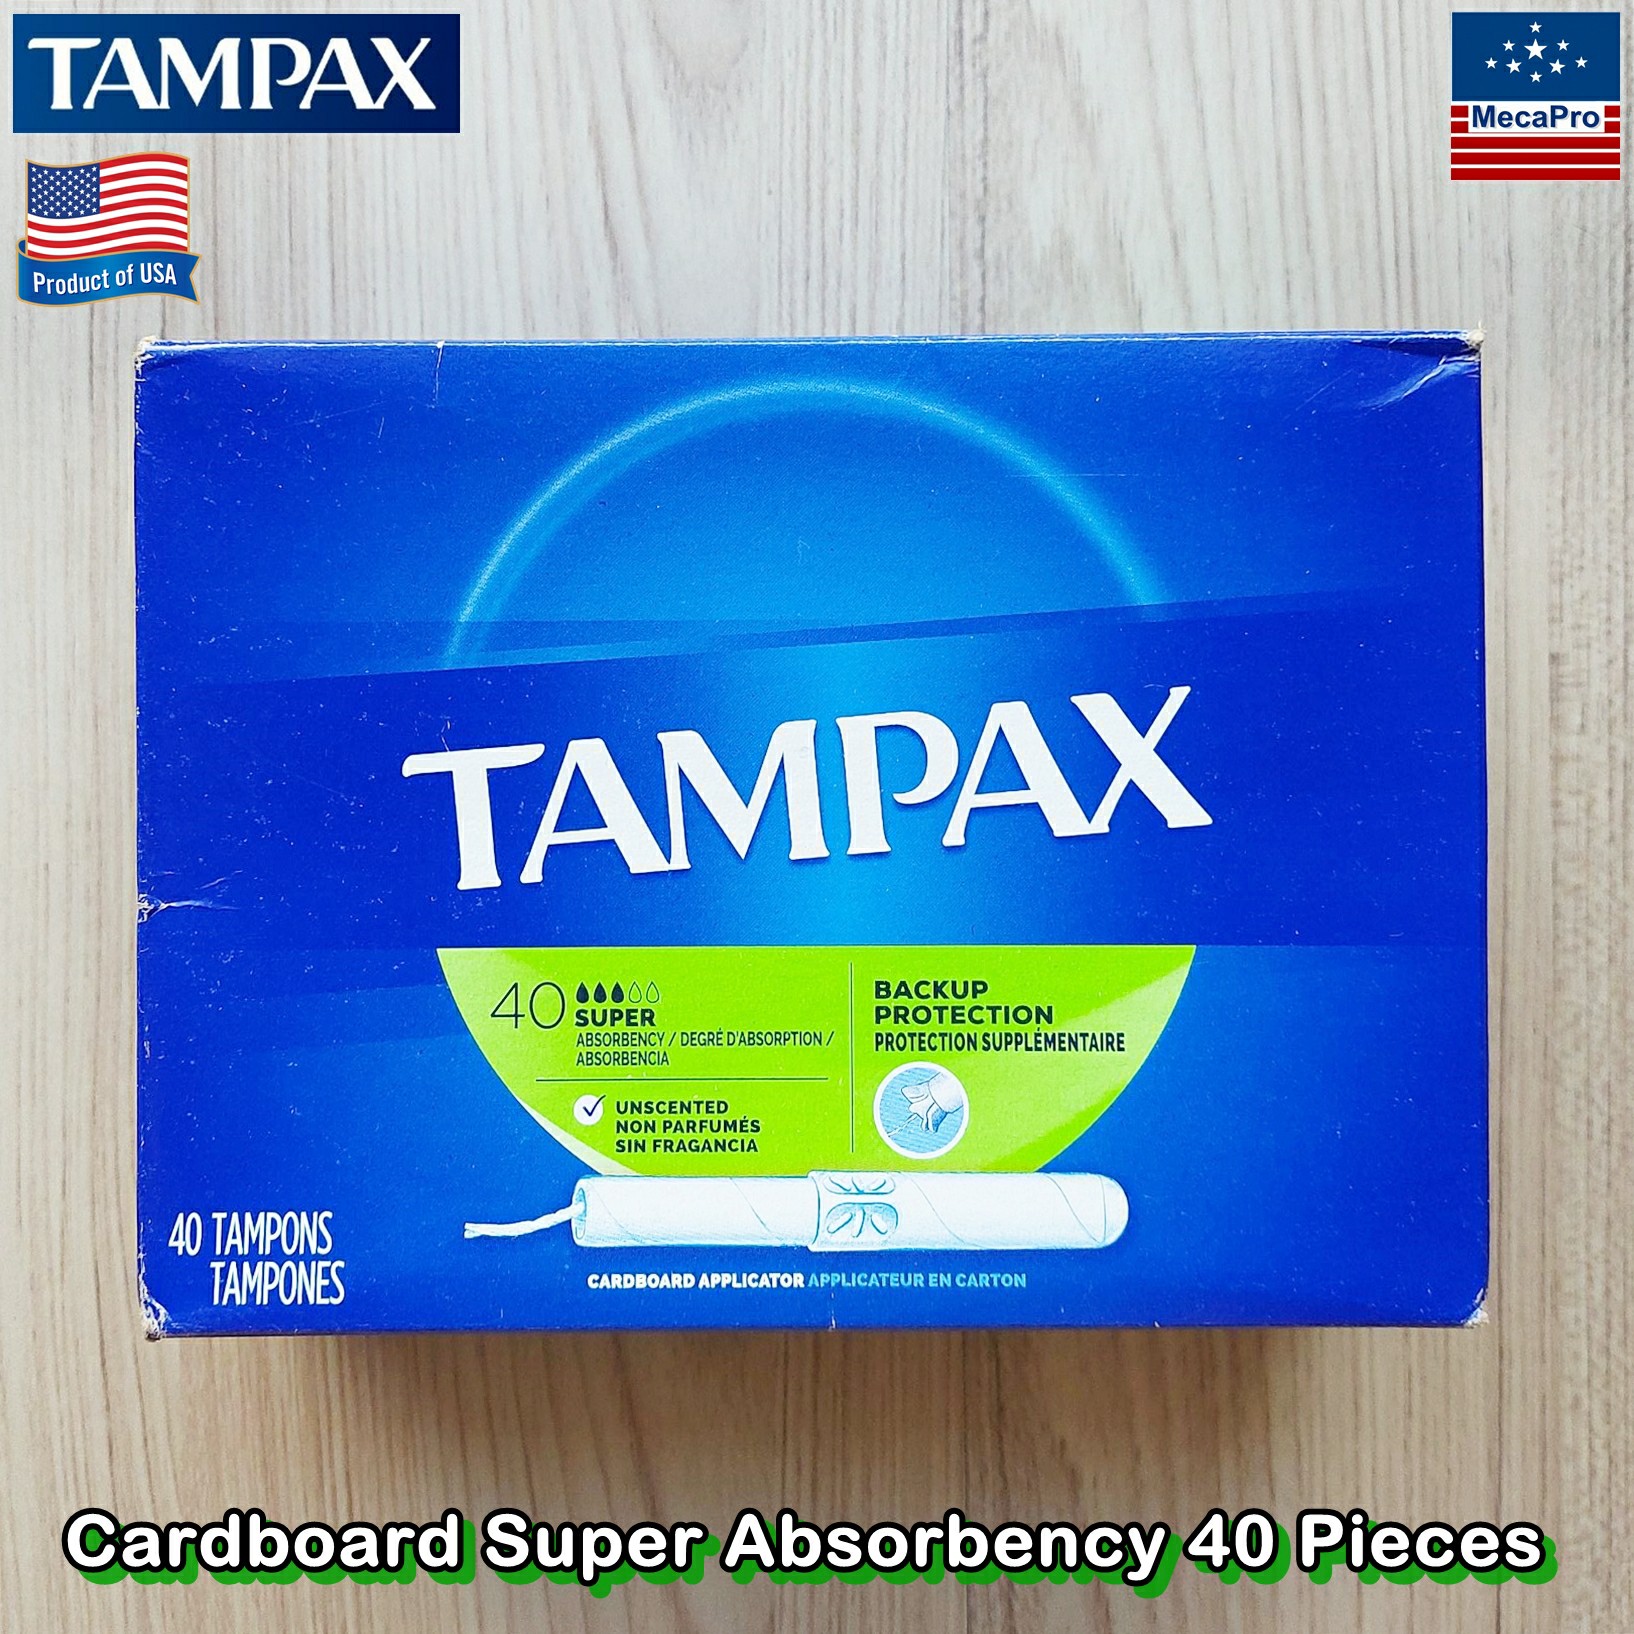 Tampax® Cardboard Applicator Tampons Super Absorbency 40 Pieces ผ้าอนามัยแบบสอด เหมาะกับวันมาปกติ-มามาก Tampon